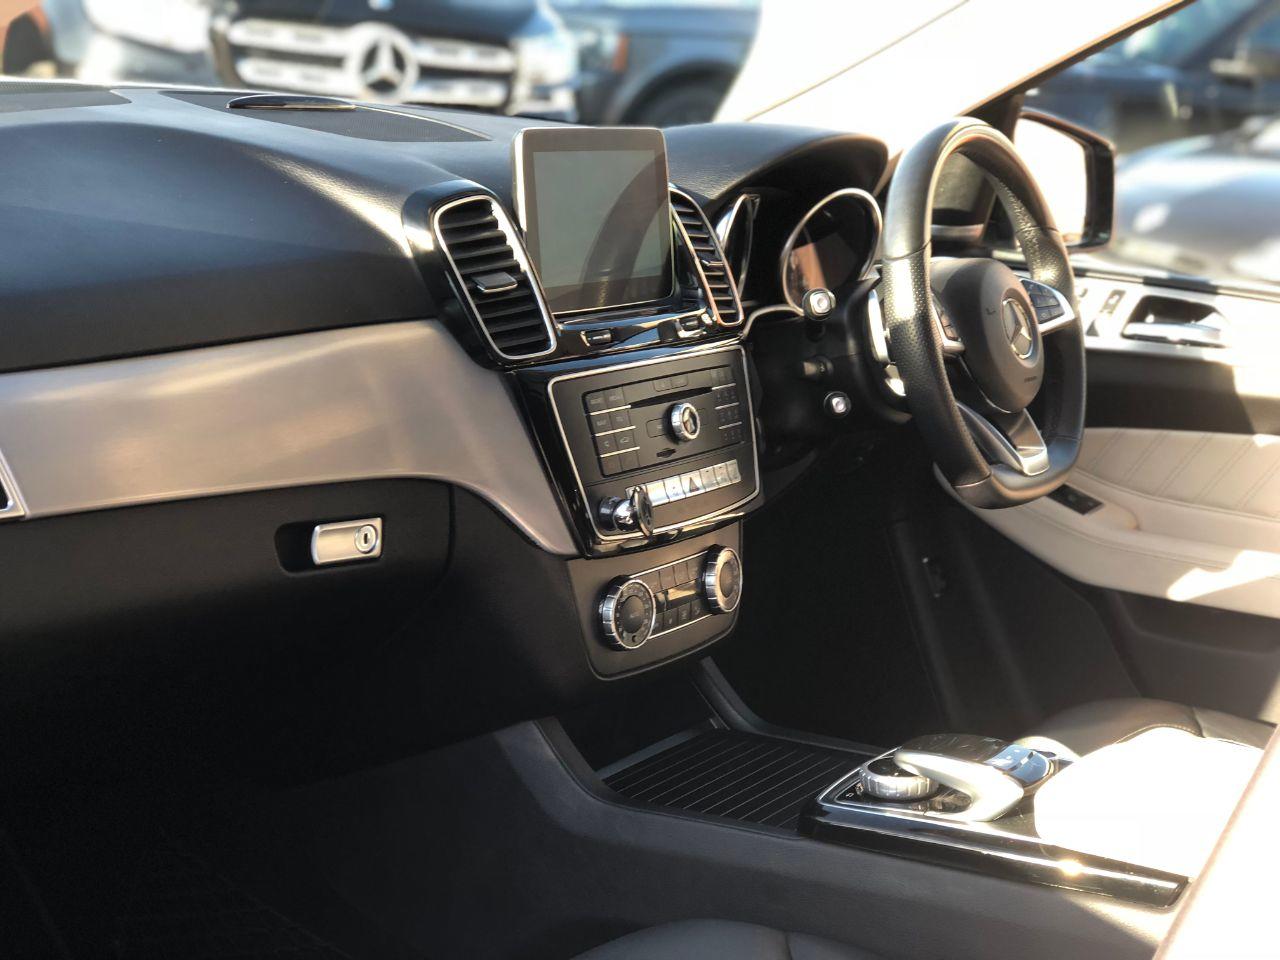 Mercedes-Benz GLE GLE350d 3.0 V6 AMG Line Premium Plus 4Matic 9G-Tronic Automatic Estate Diesel Designo Diamond White Metallic